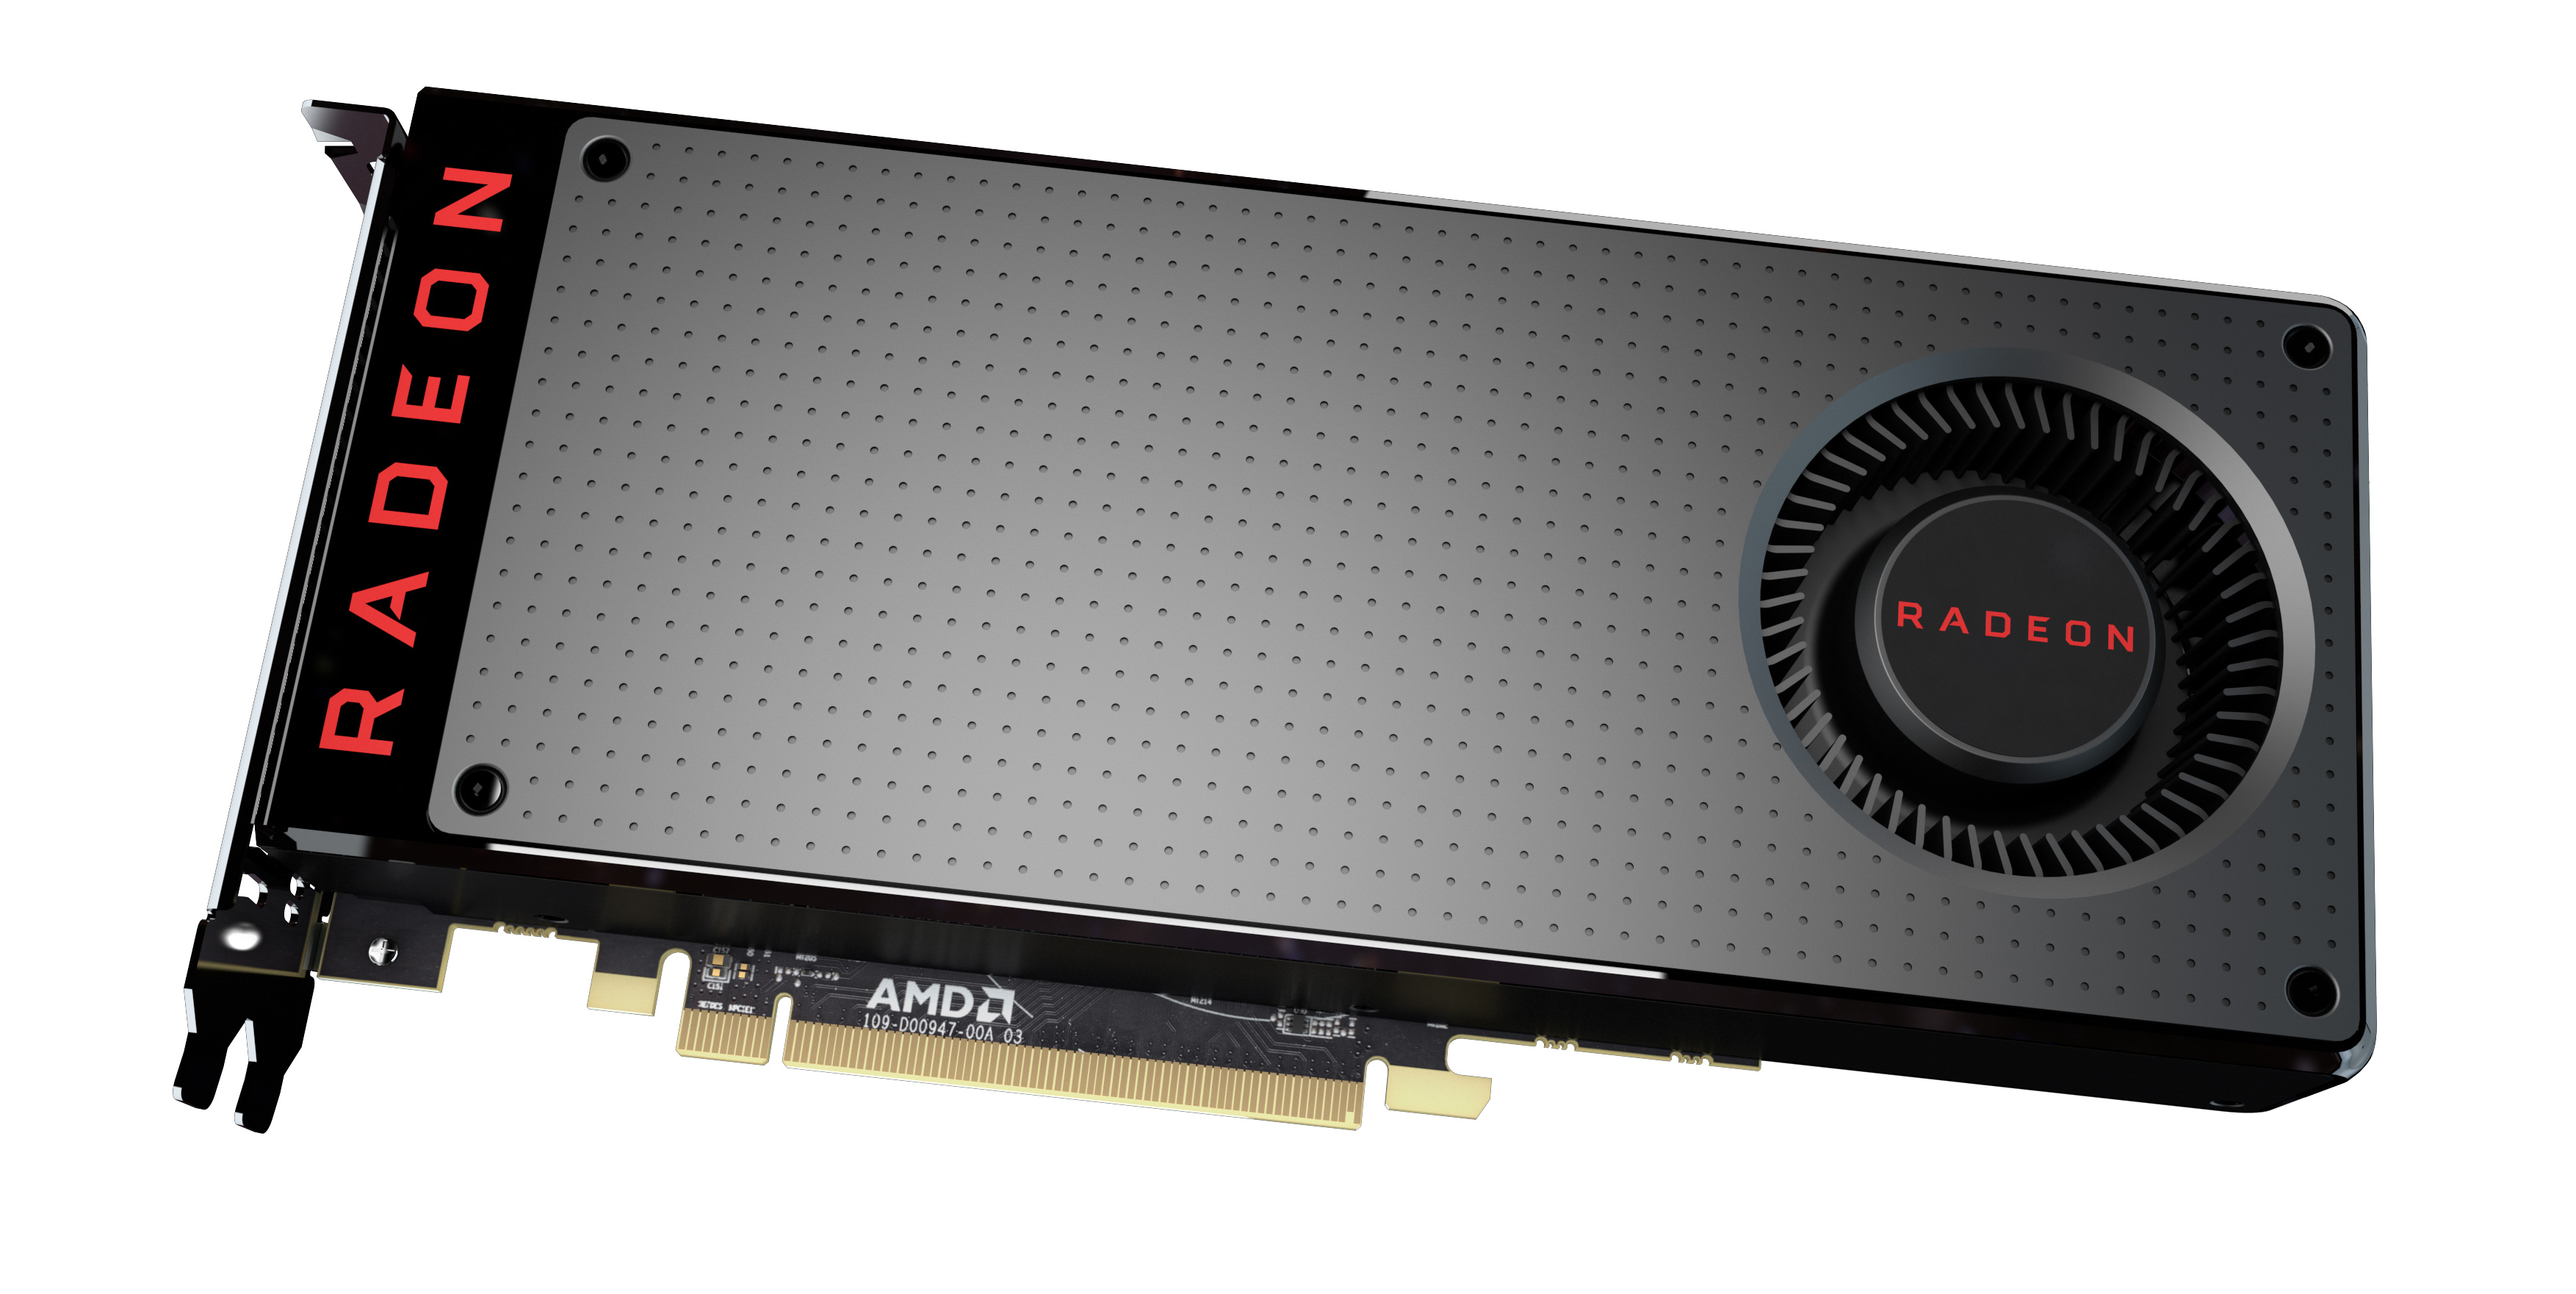 AMD Radeon RX 480 Preview: Polaris 